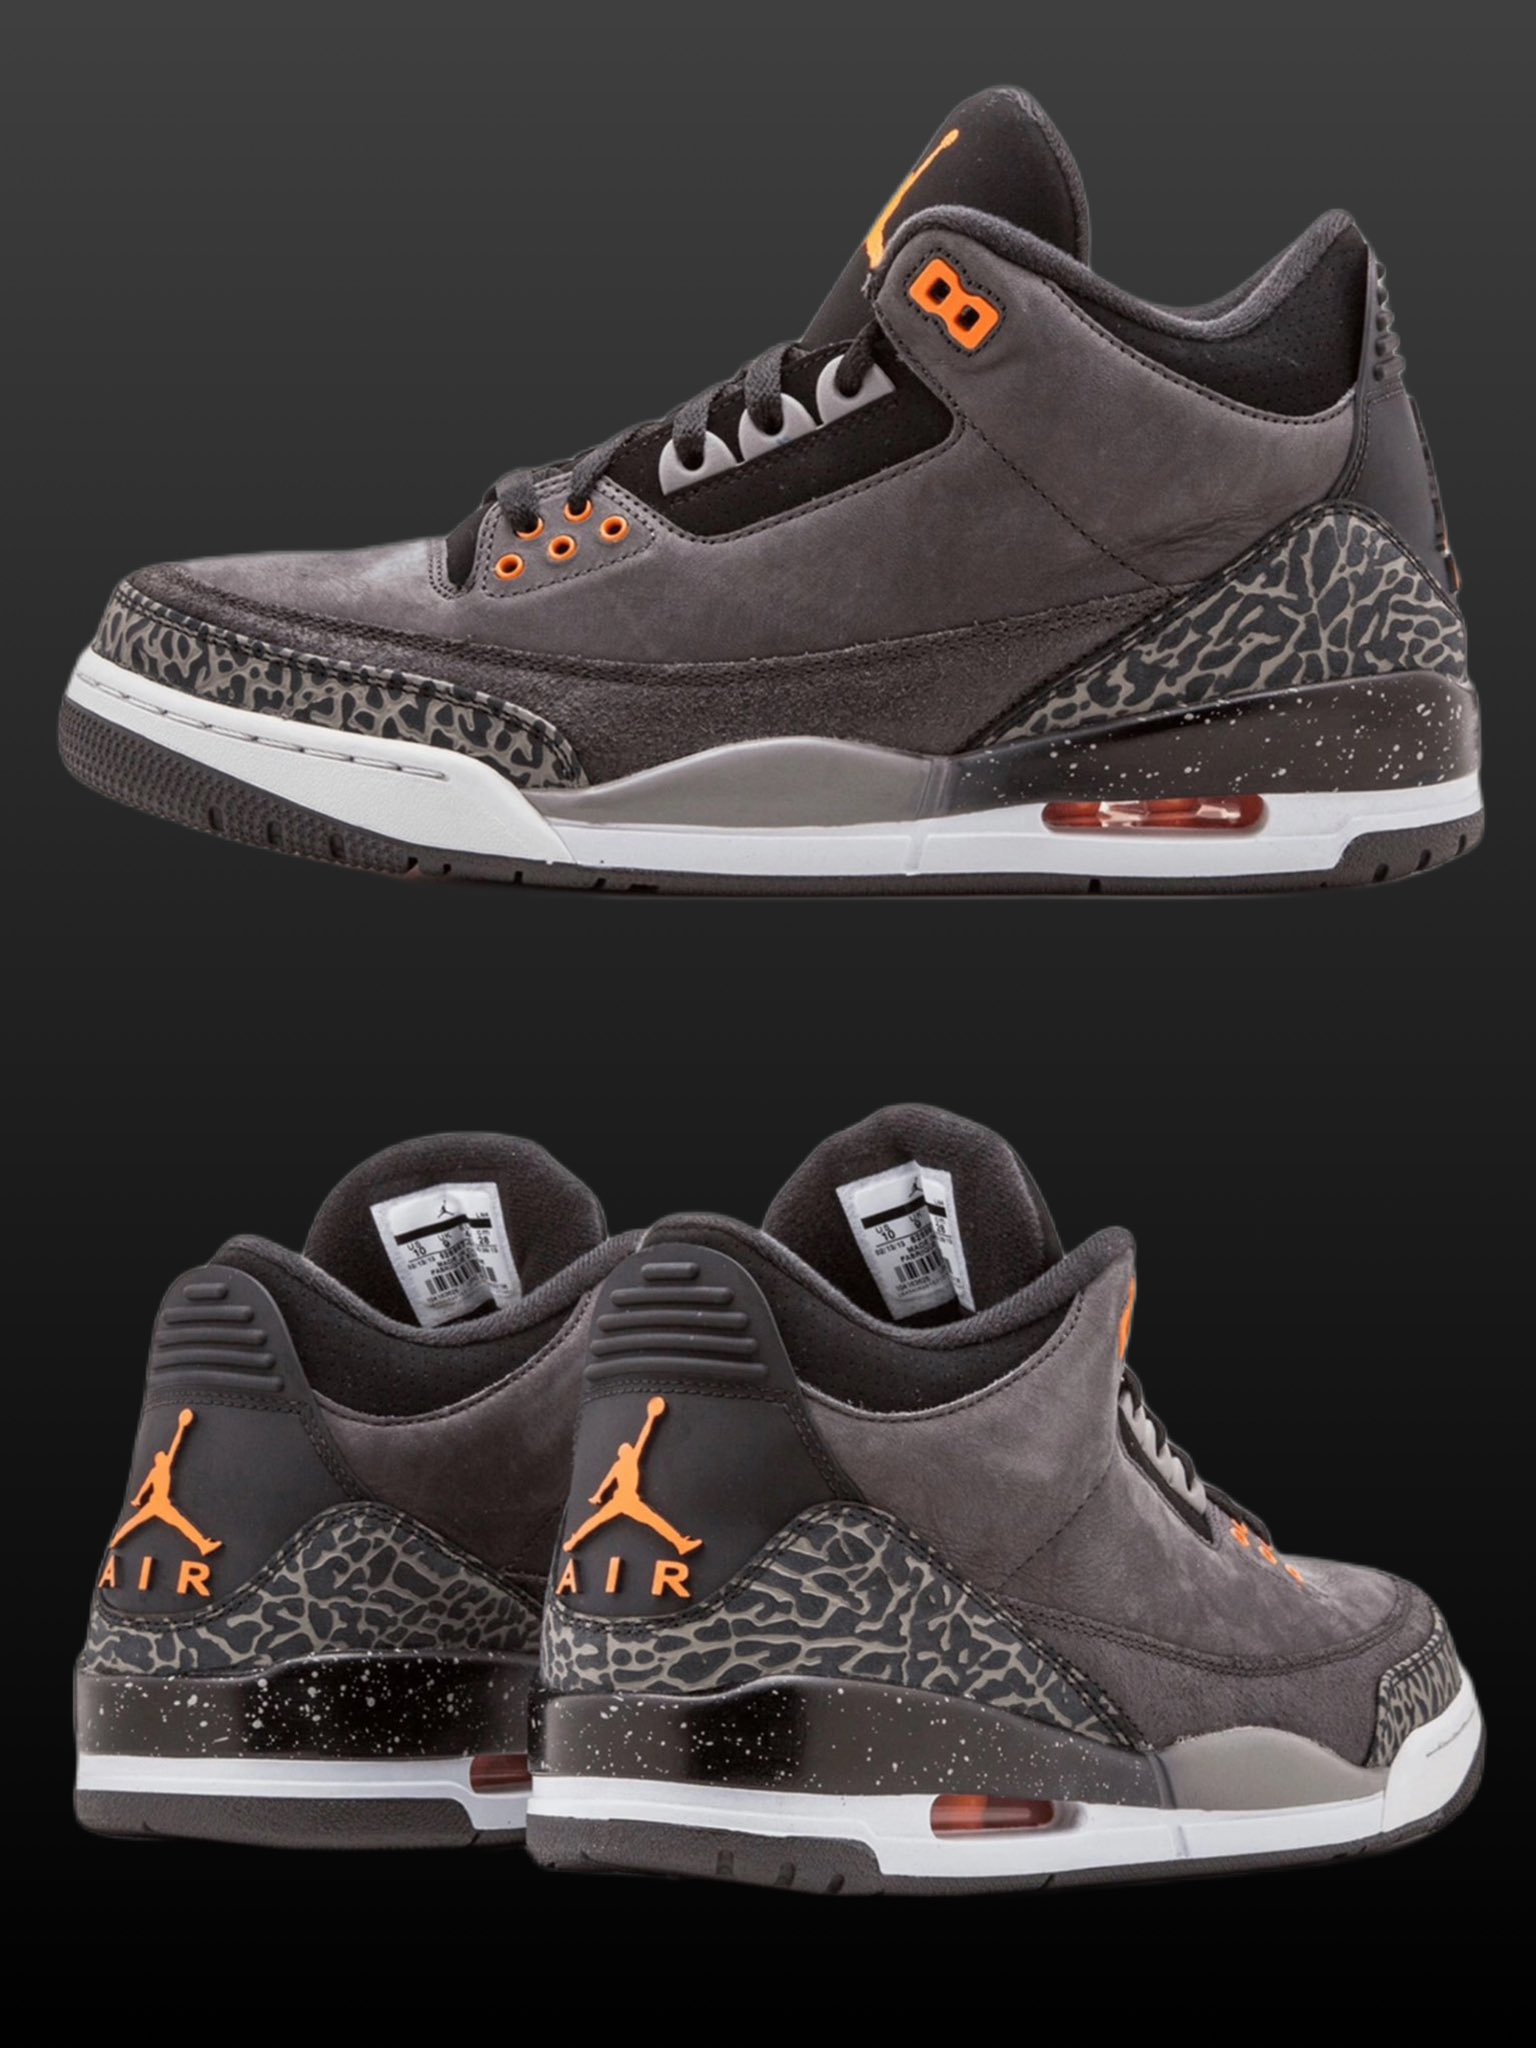 The Air Jordan 3 Fear Releases November 25 - Sneaker News